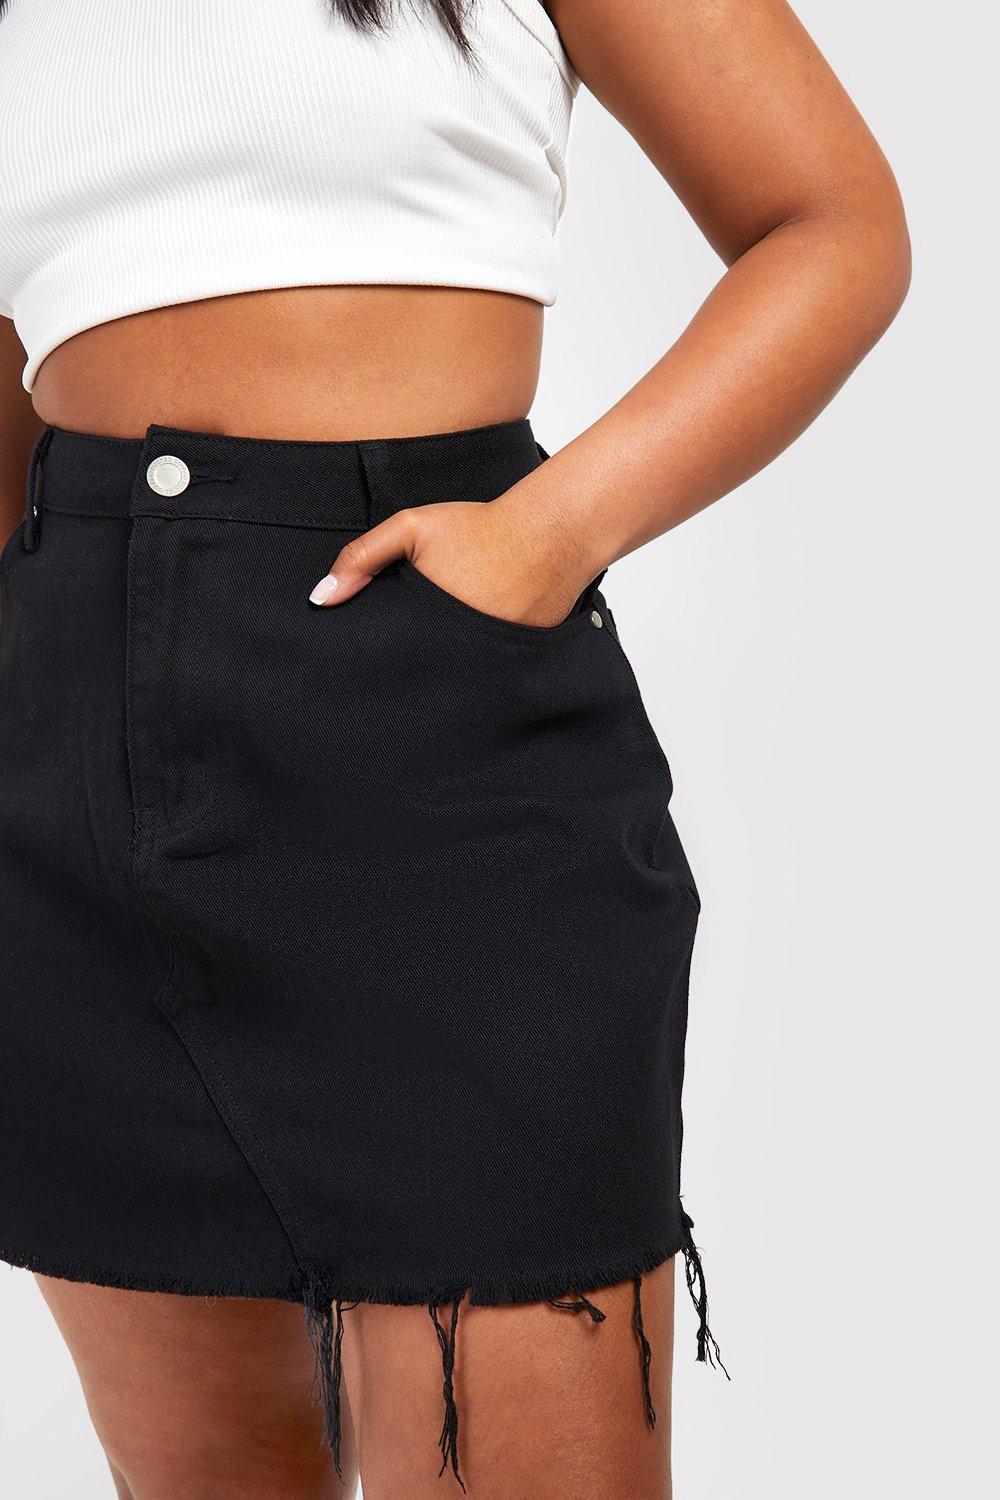 Classy Closet Online Modest Boutique Below Knee Length Maternity Denim Skirt  – Classy Closet Shop